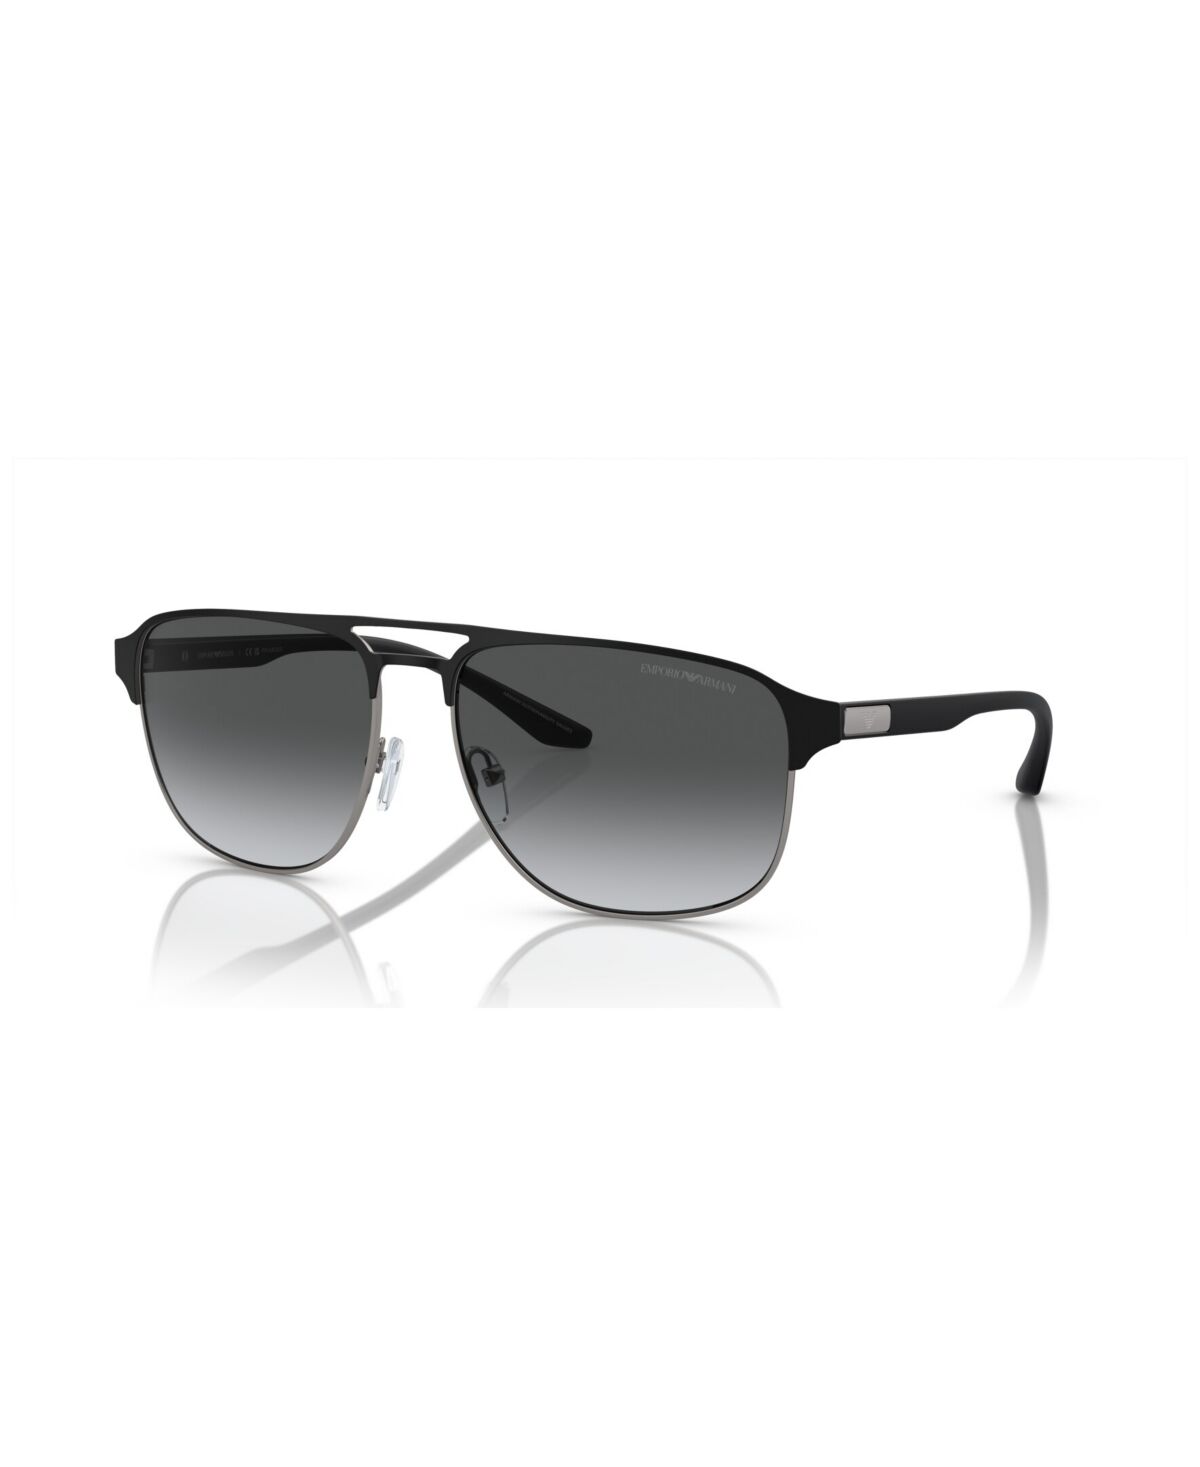 Emporio Armani s Polarized Sunglasses, Gradient Polar EA2144 - Matte Gunmetal, Black